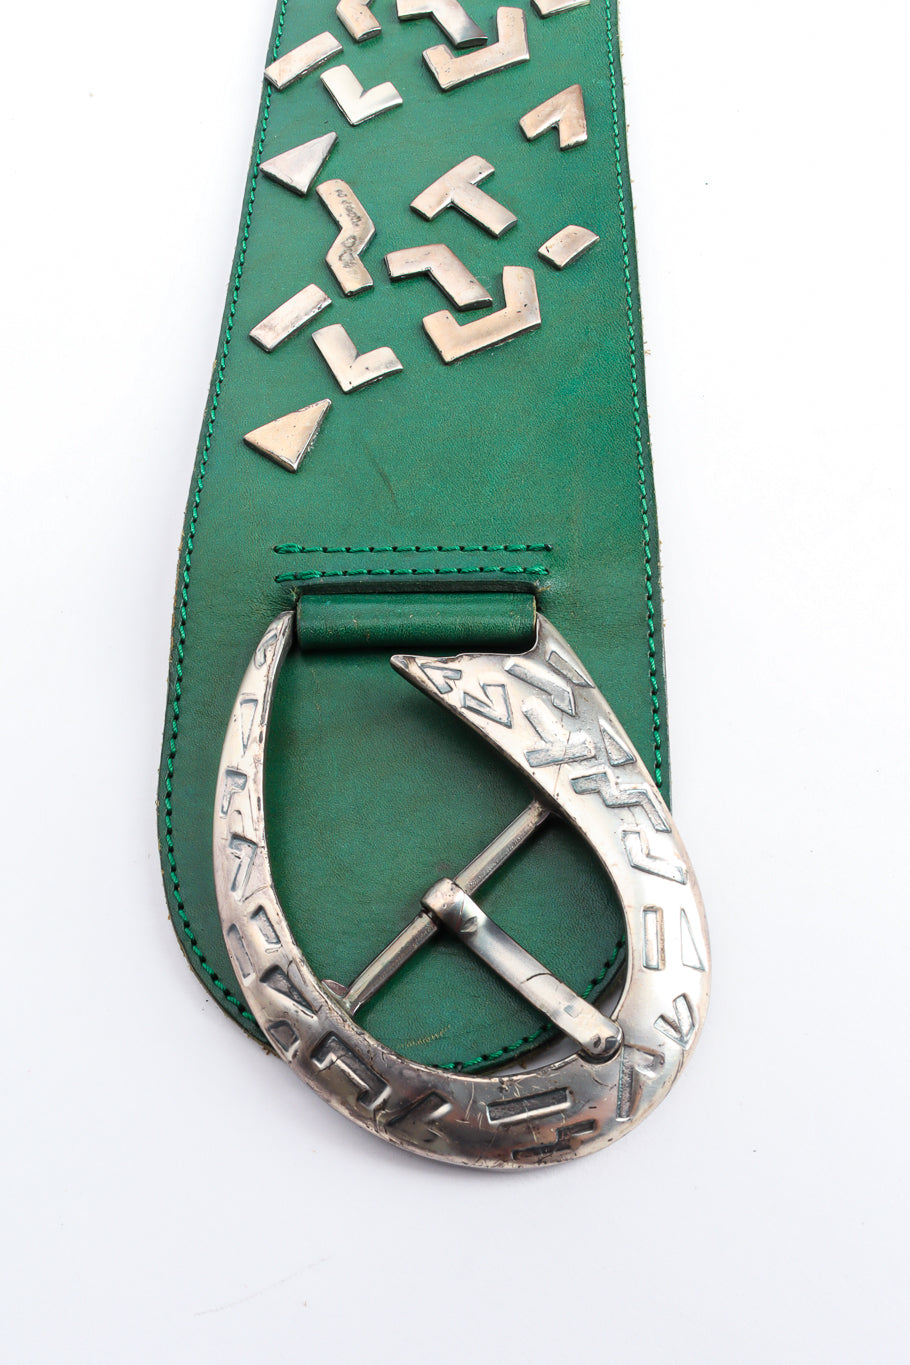 kelly green leather belt by Avion International close up of buckle @recessla